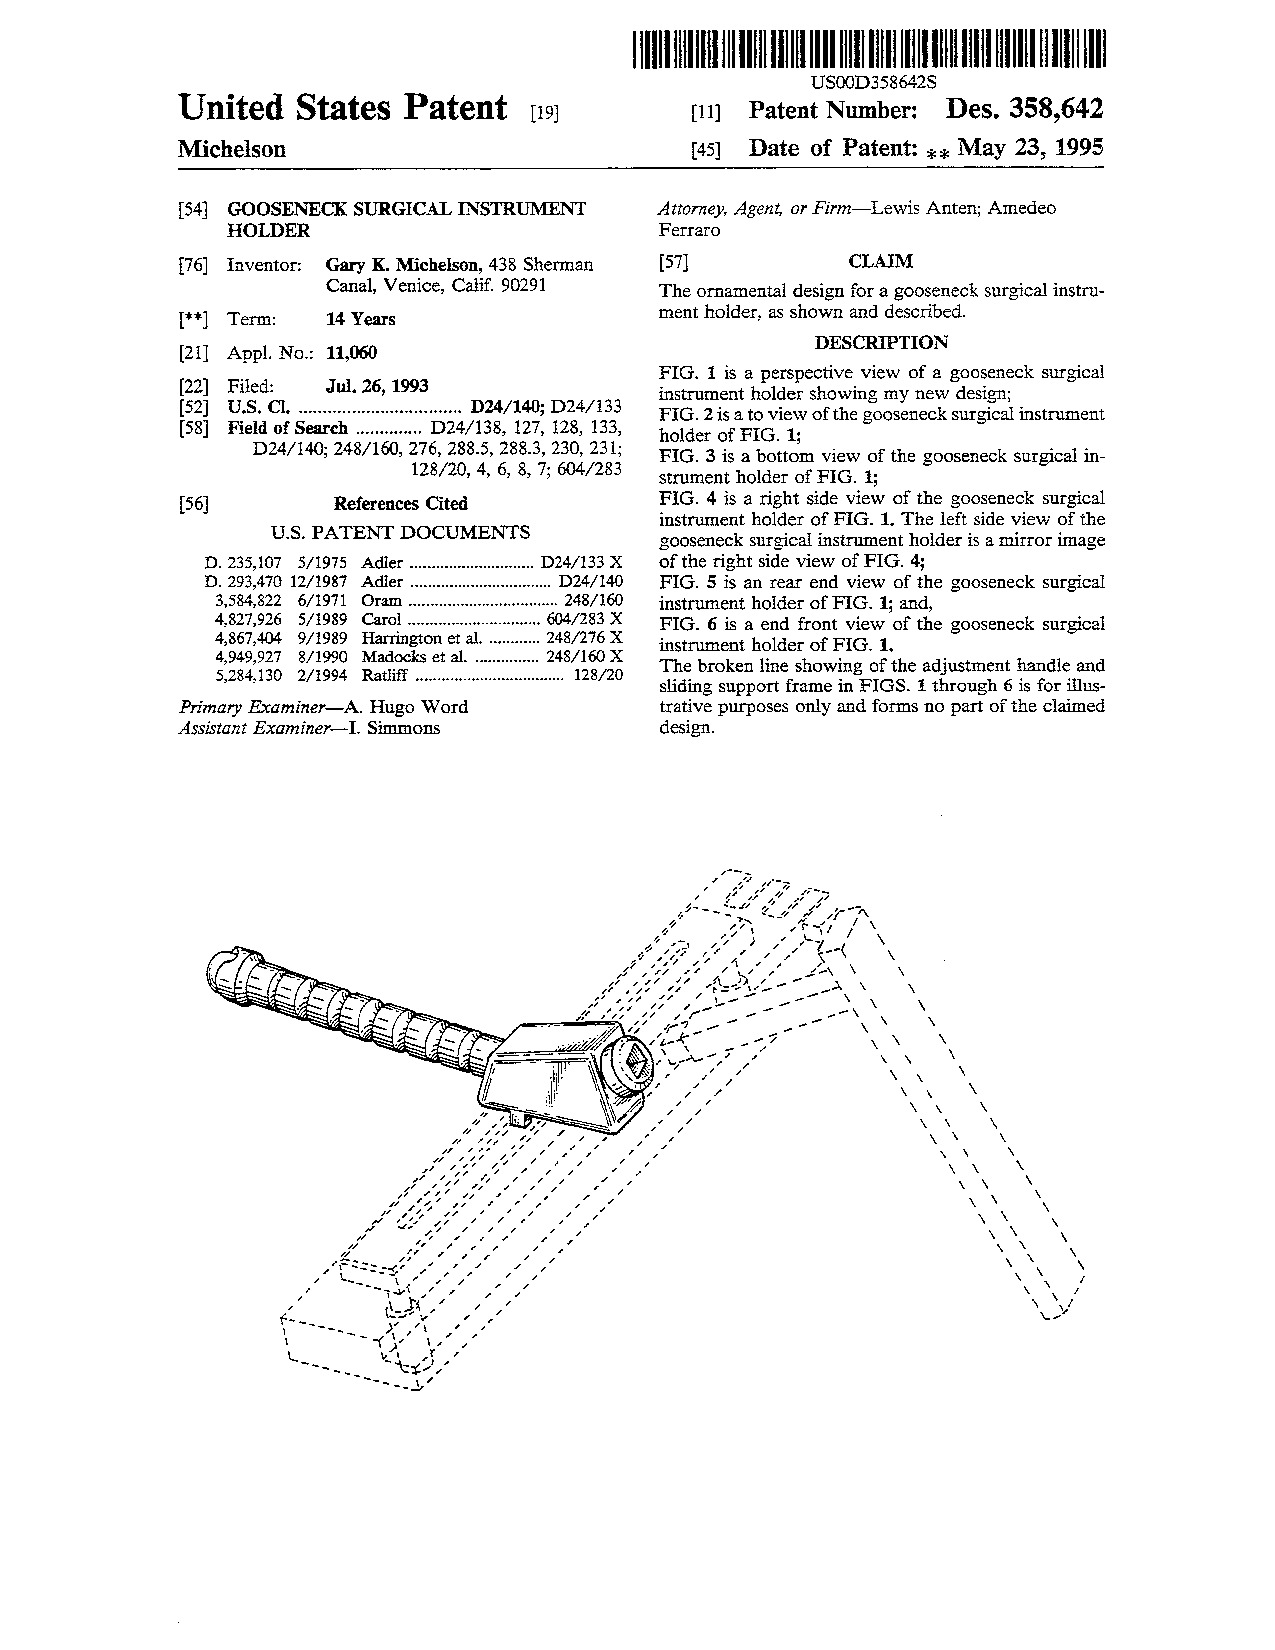 Gooseneck surgical instrument holder - Patent D358,642